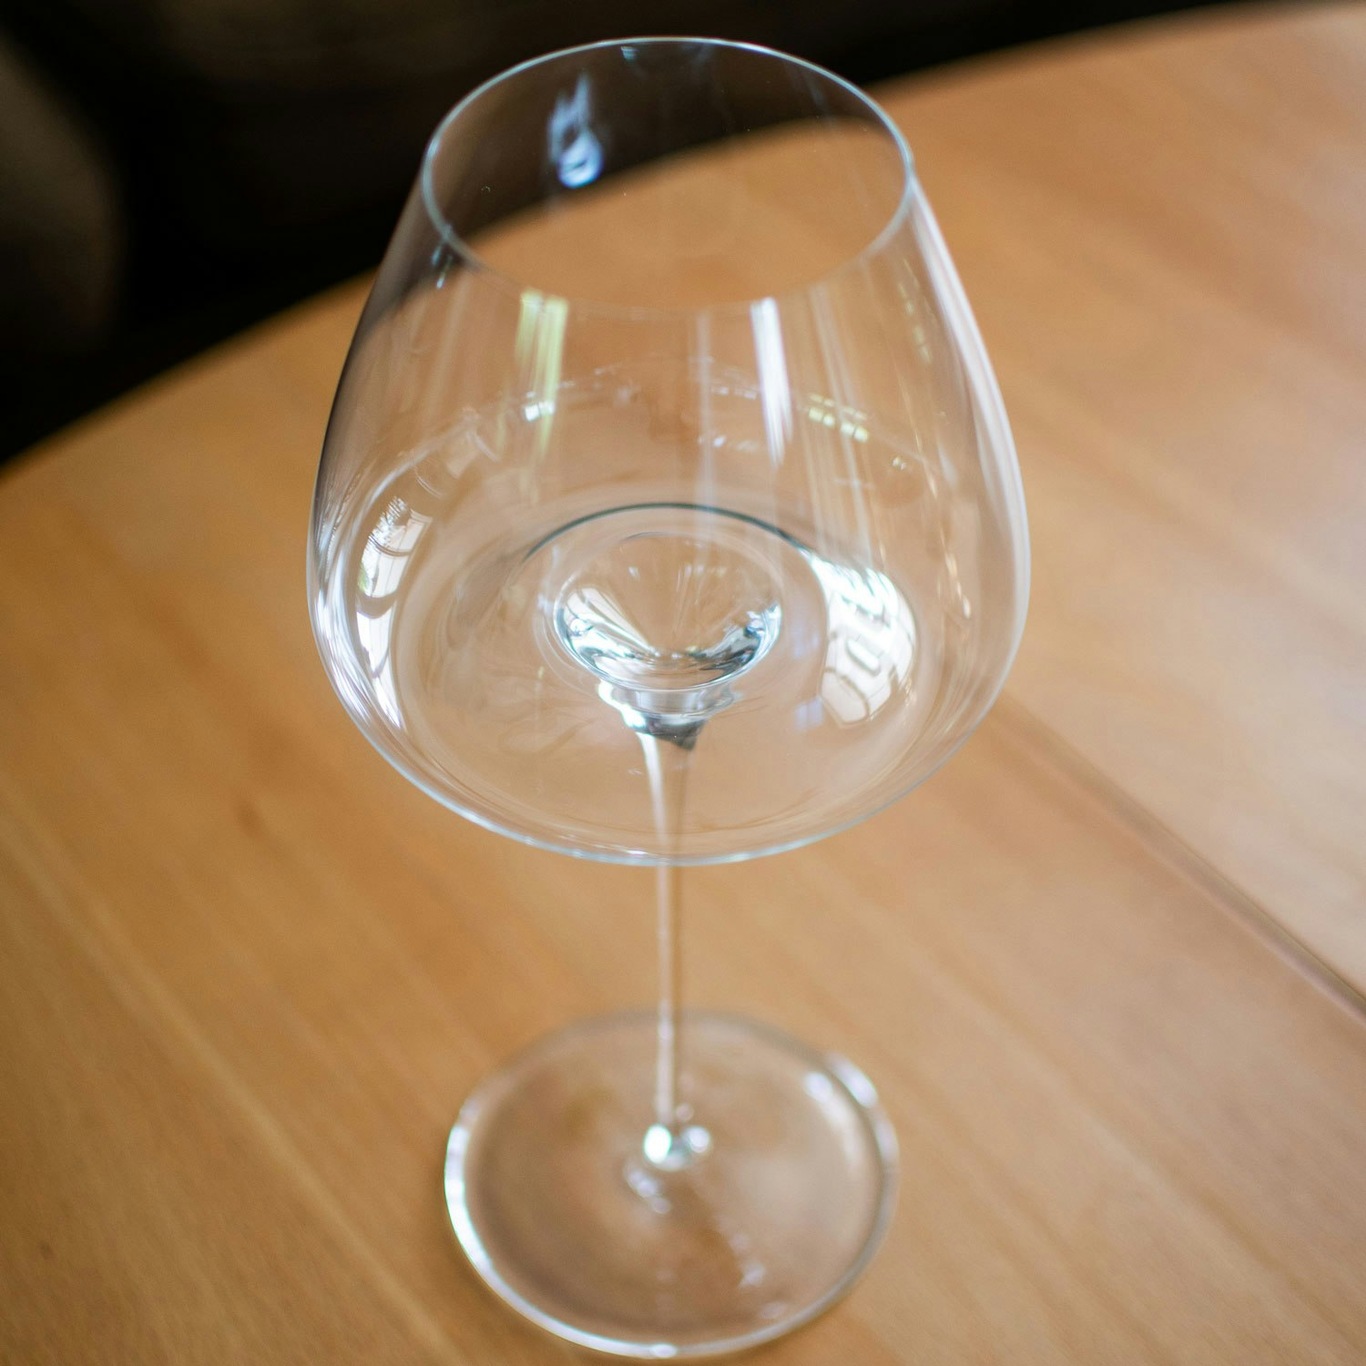 https://royaldesign.com/image/2/zieher-vision-balanced-wine-glass-2-pack-12?w=800&quality=80